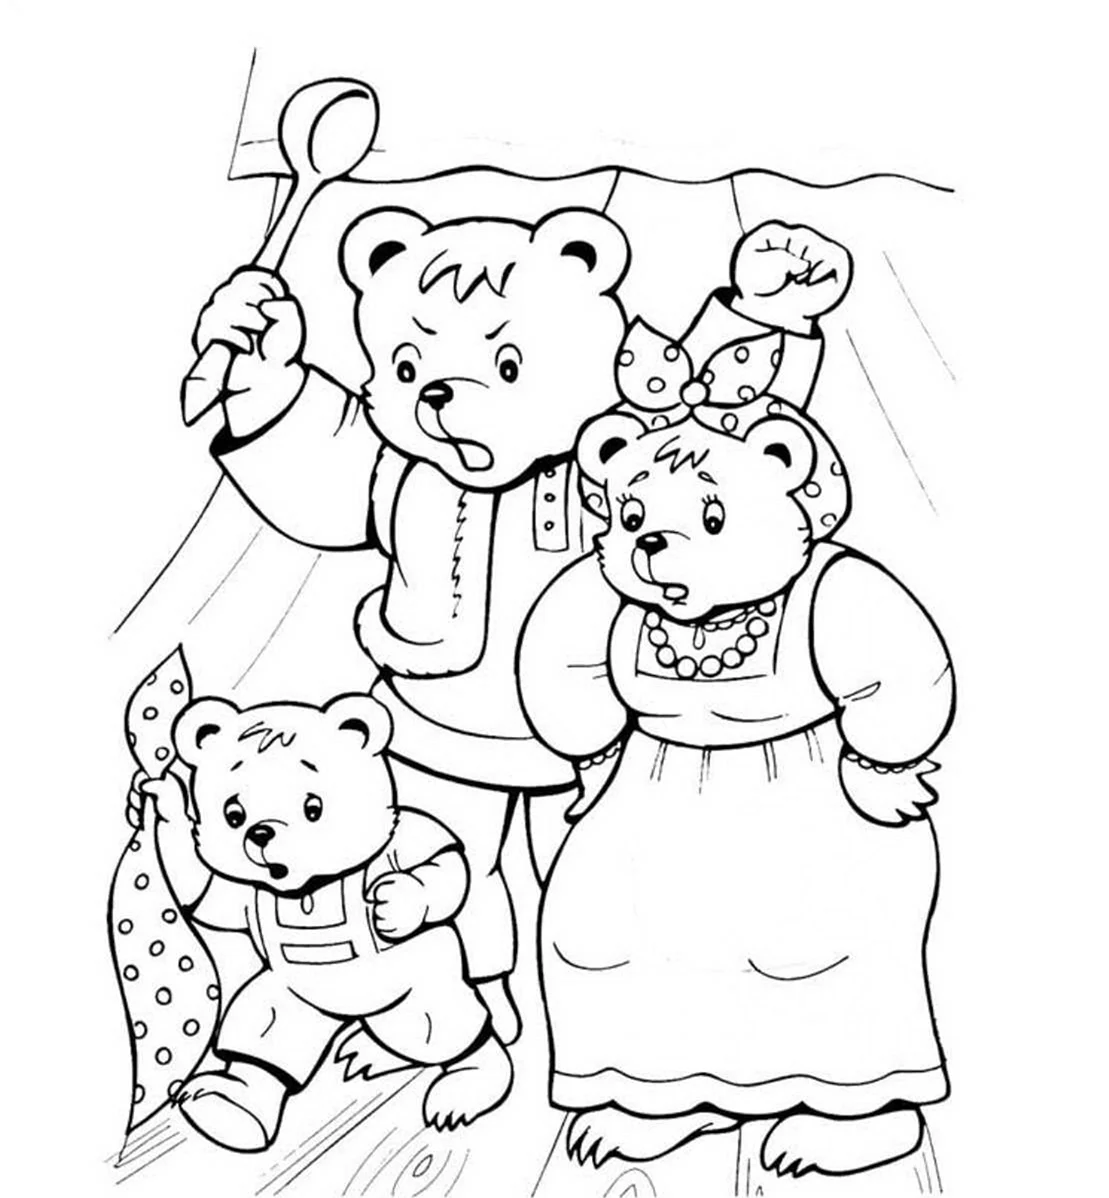 Сказка-раскраска три медведя. Для срисовки